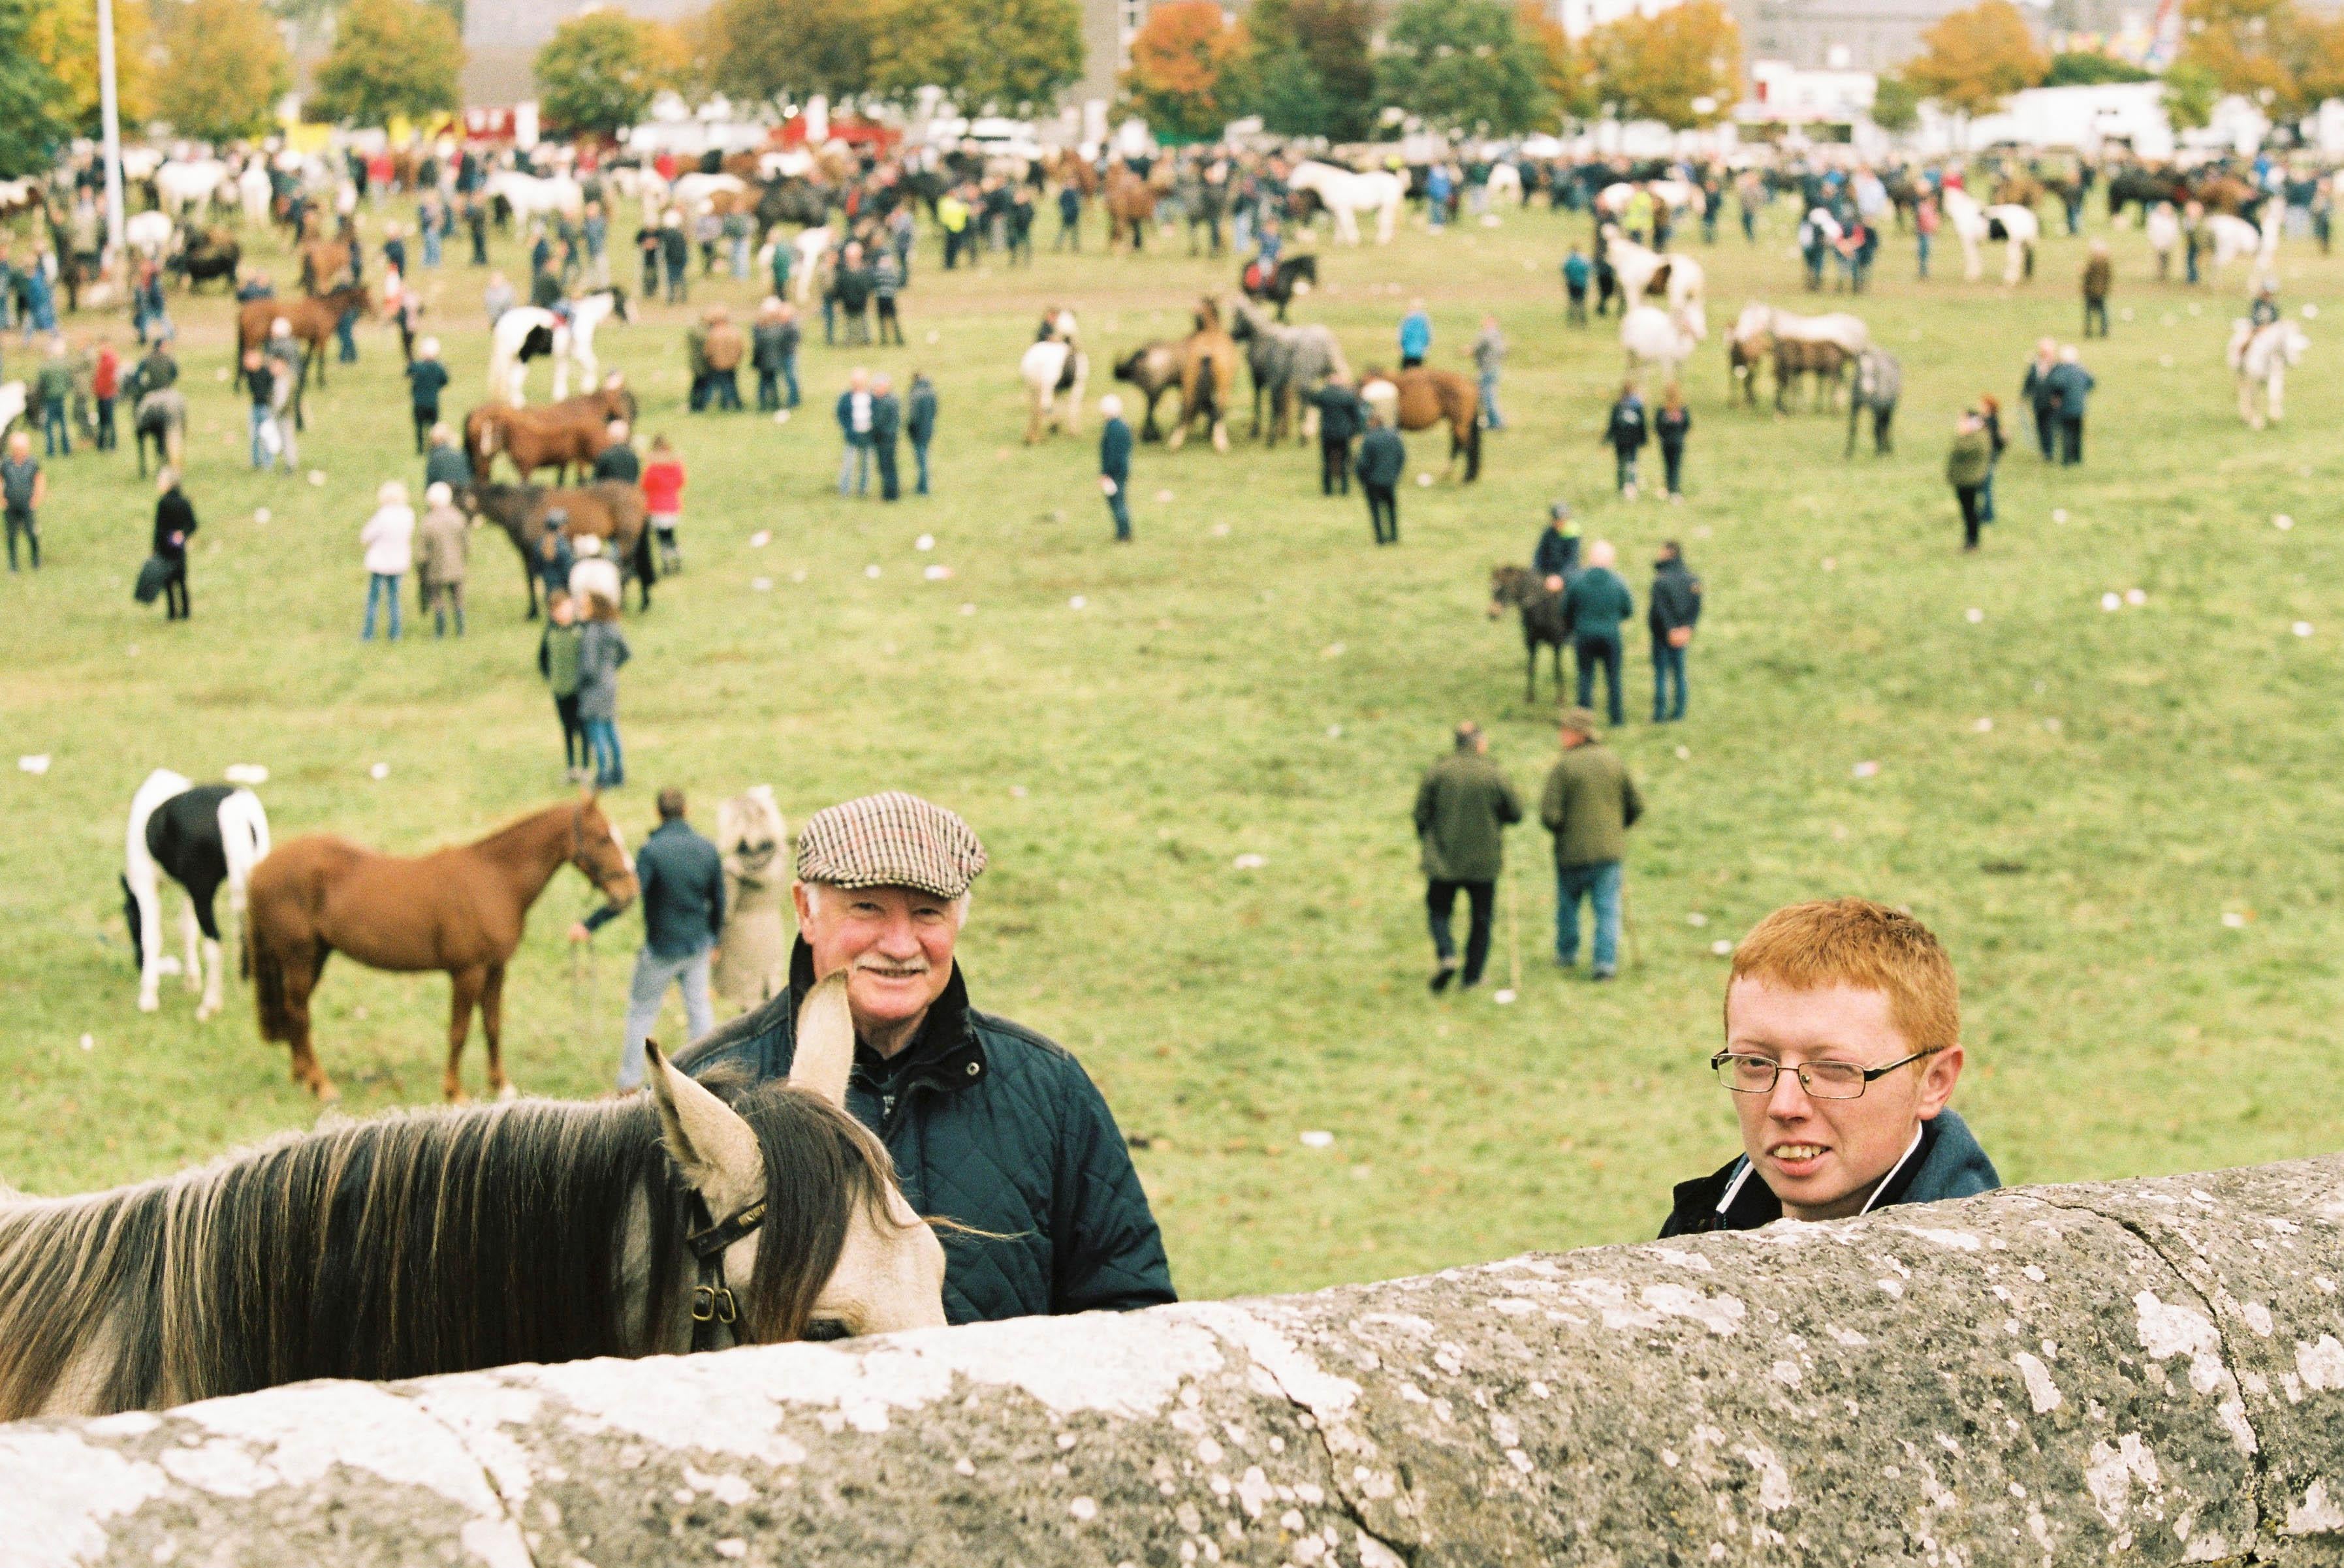 Marion Bergin Animal Print - Boy on Horse - Ballinasloe Horse Fair, Ireland, 2018